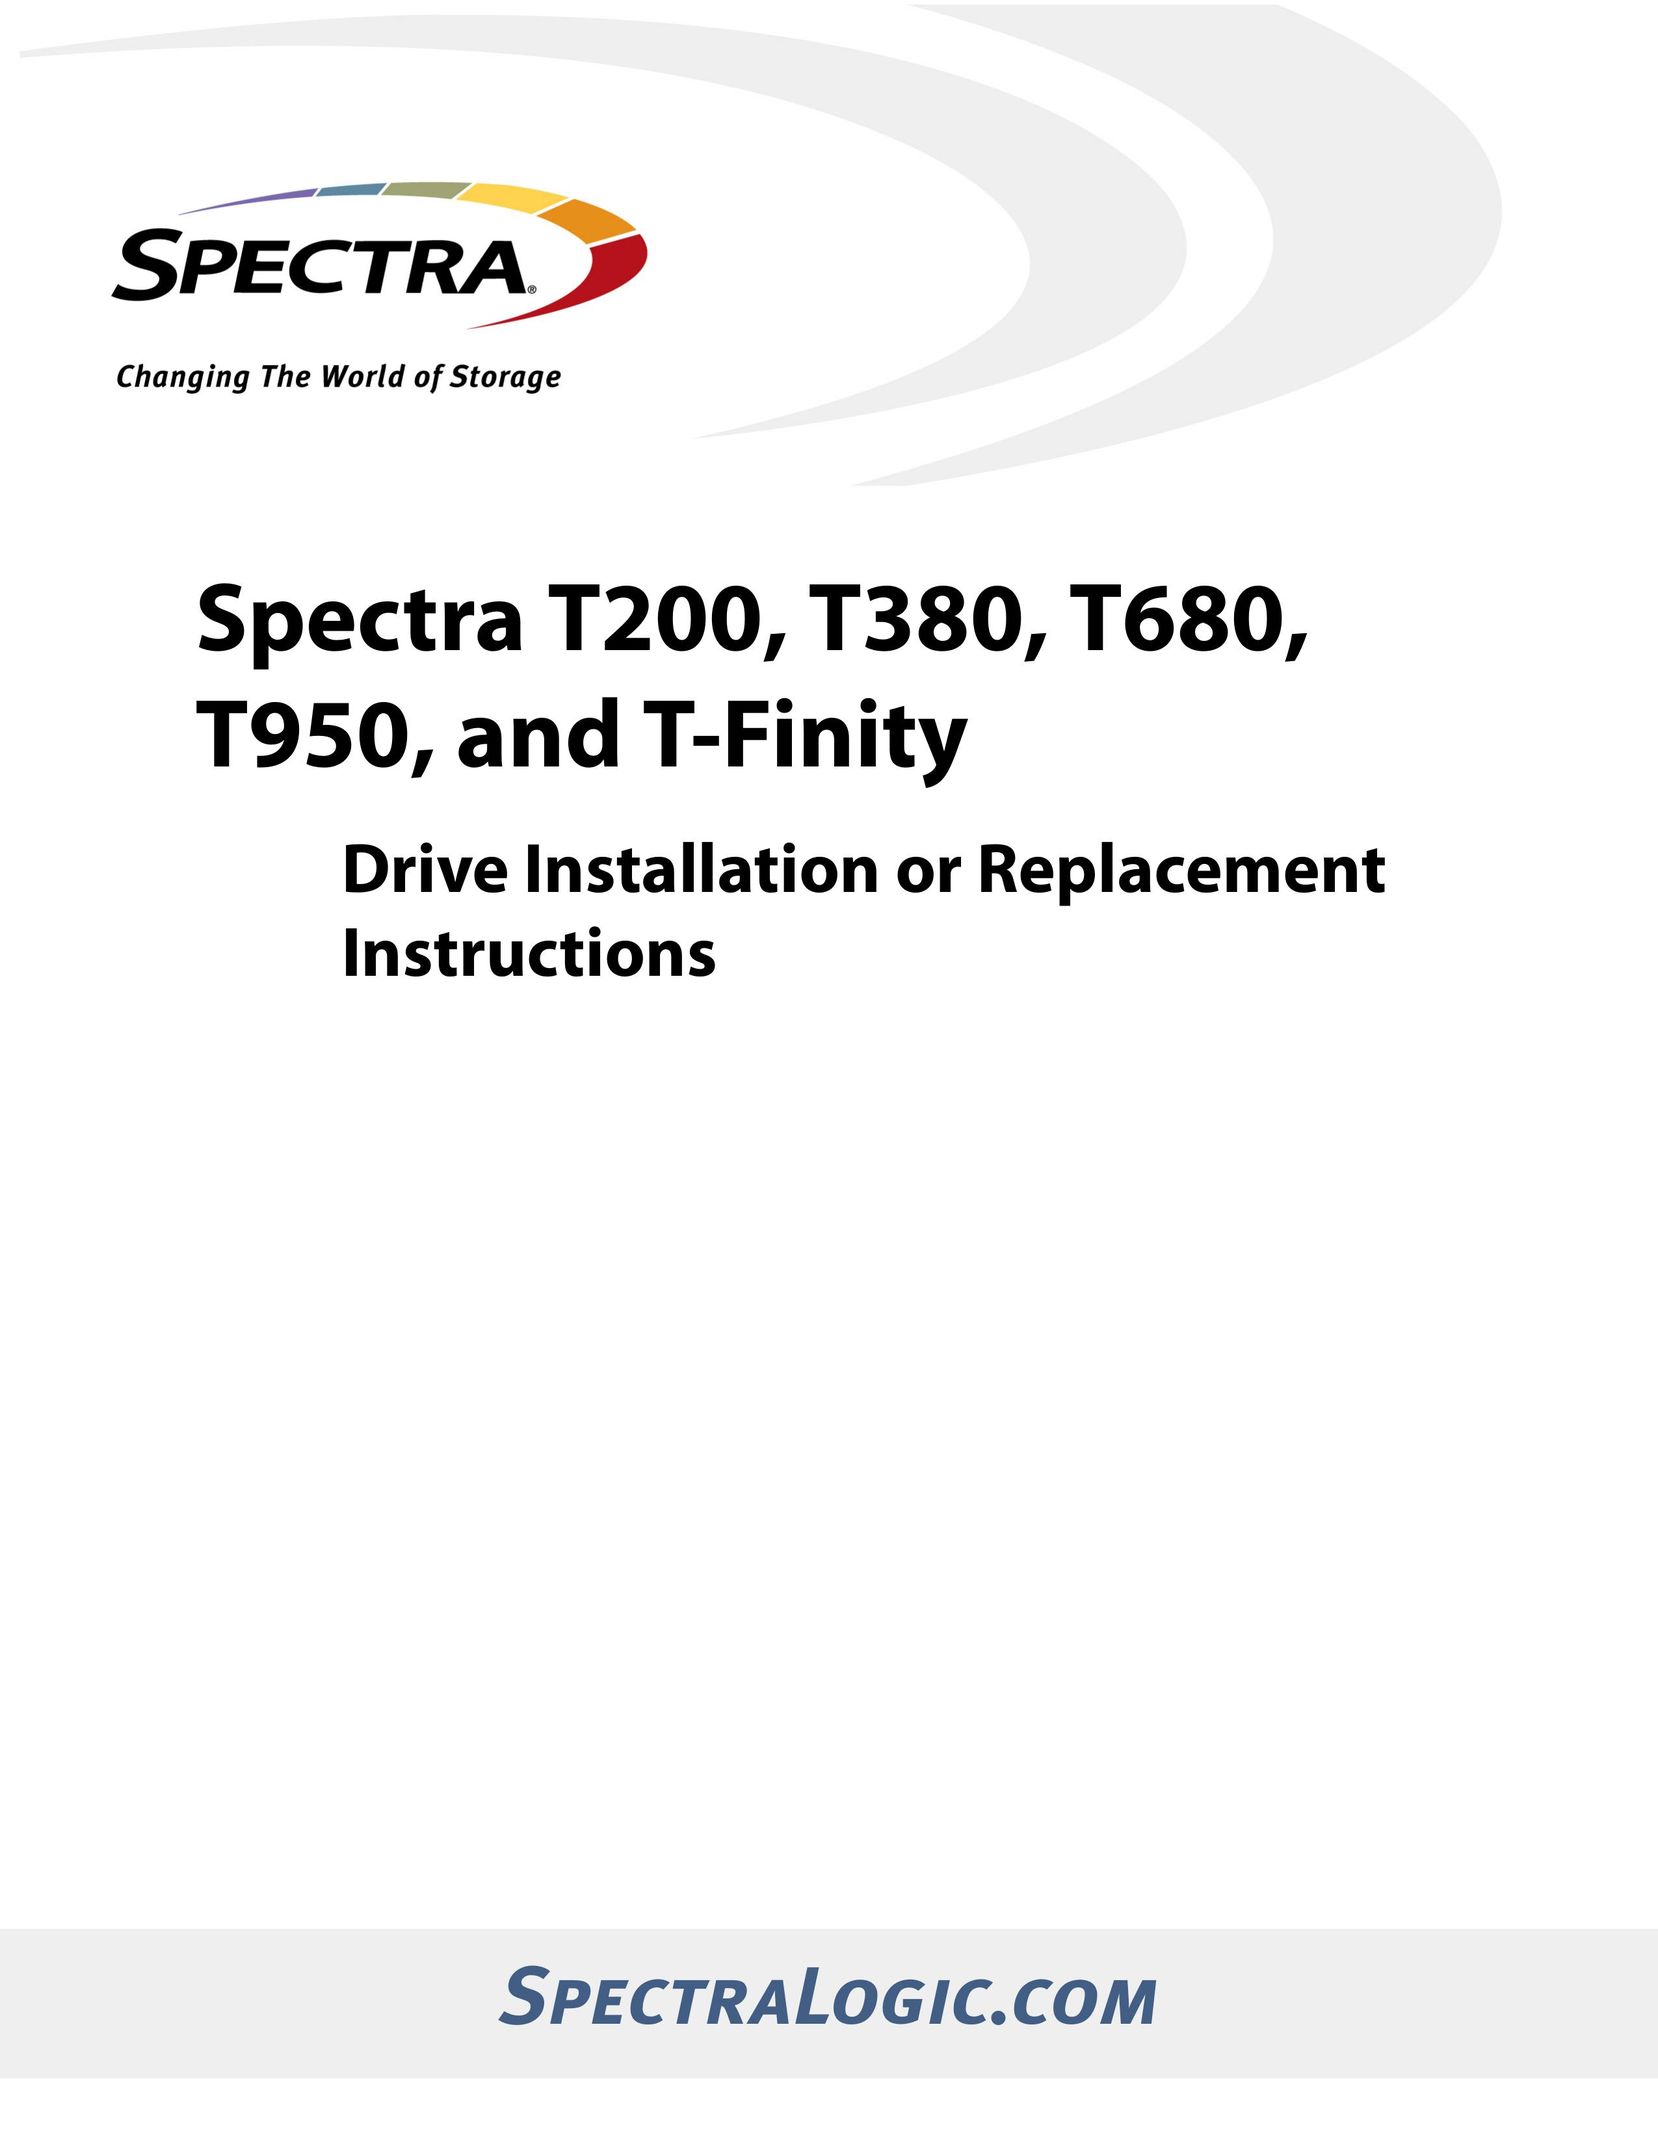 Spectra Logic T950 Computer Drive User Manual